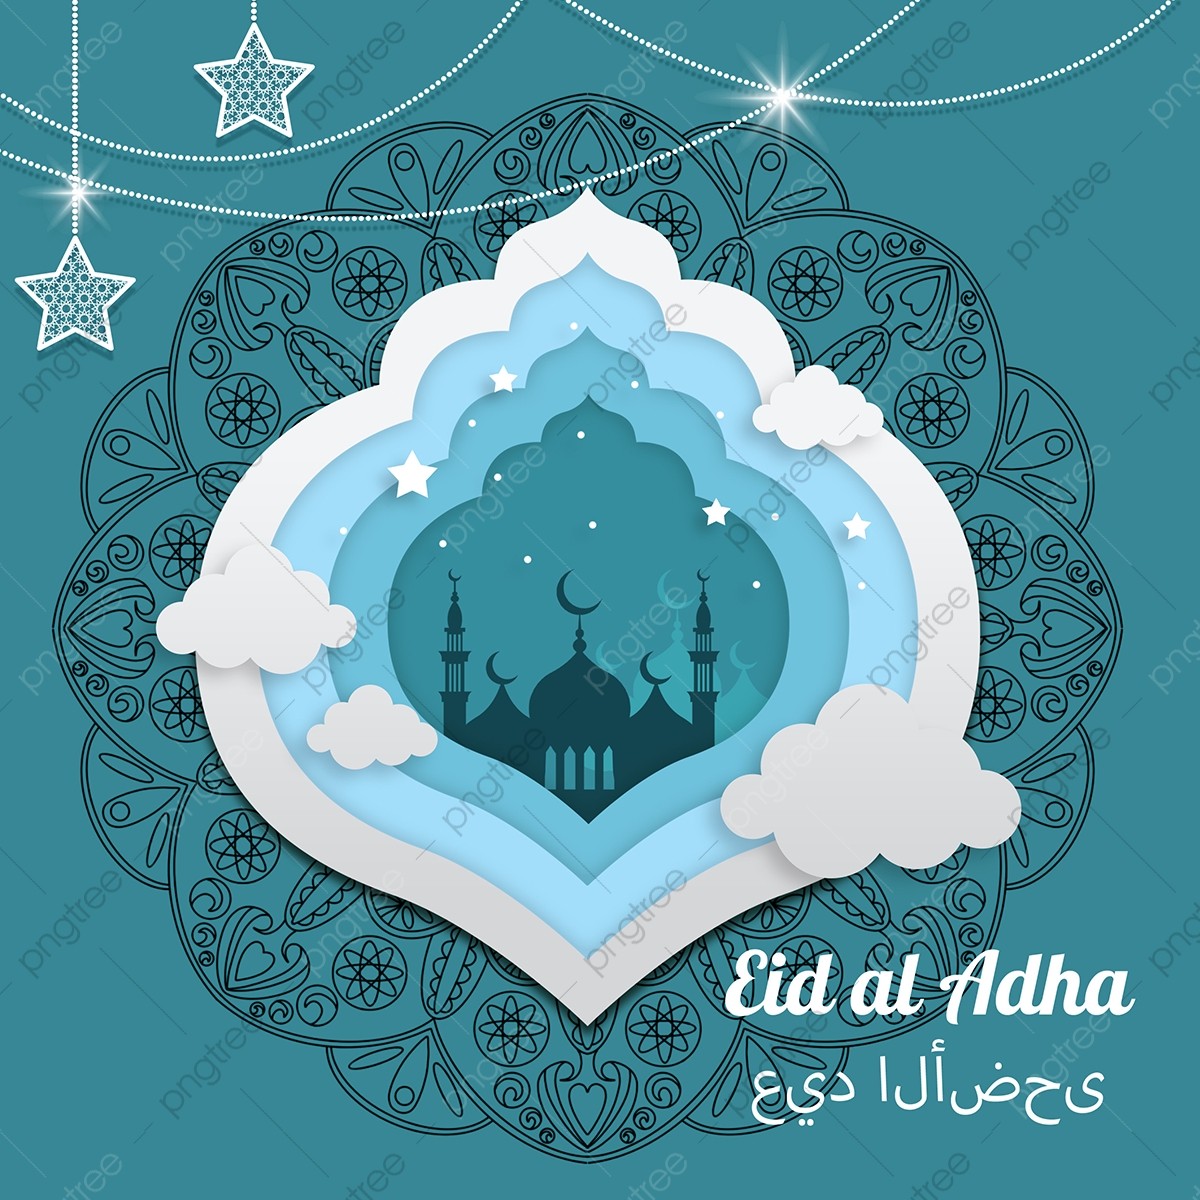 pngtree-eid-al-adha-blue-background-pattern-png-image_6379539.jpg